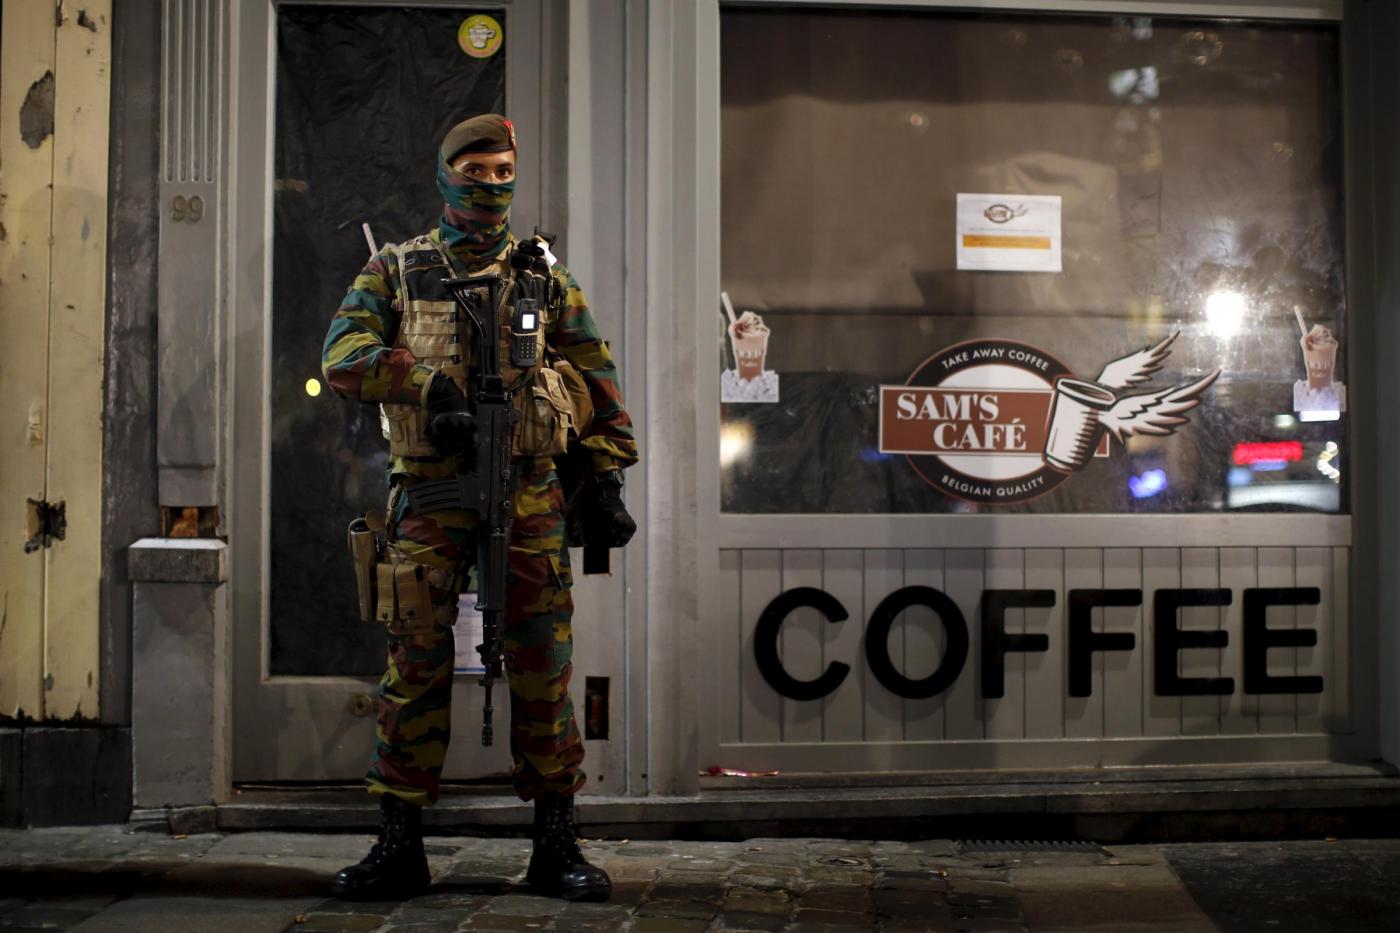 Bruxelles resta blindata: allerta terrorismo sempre massima